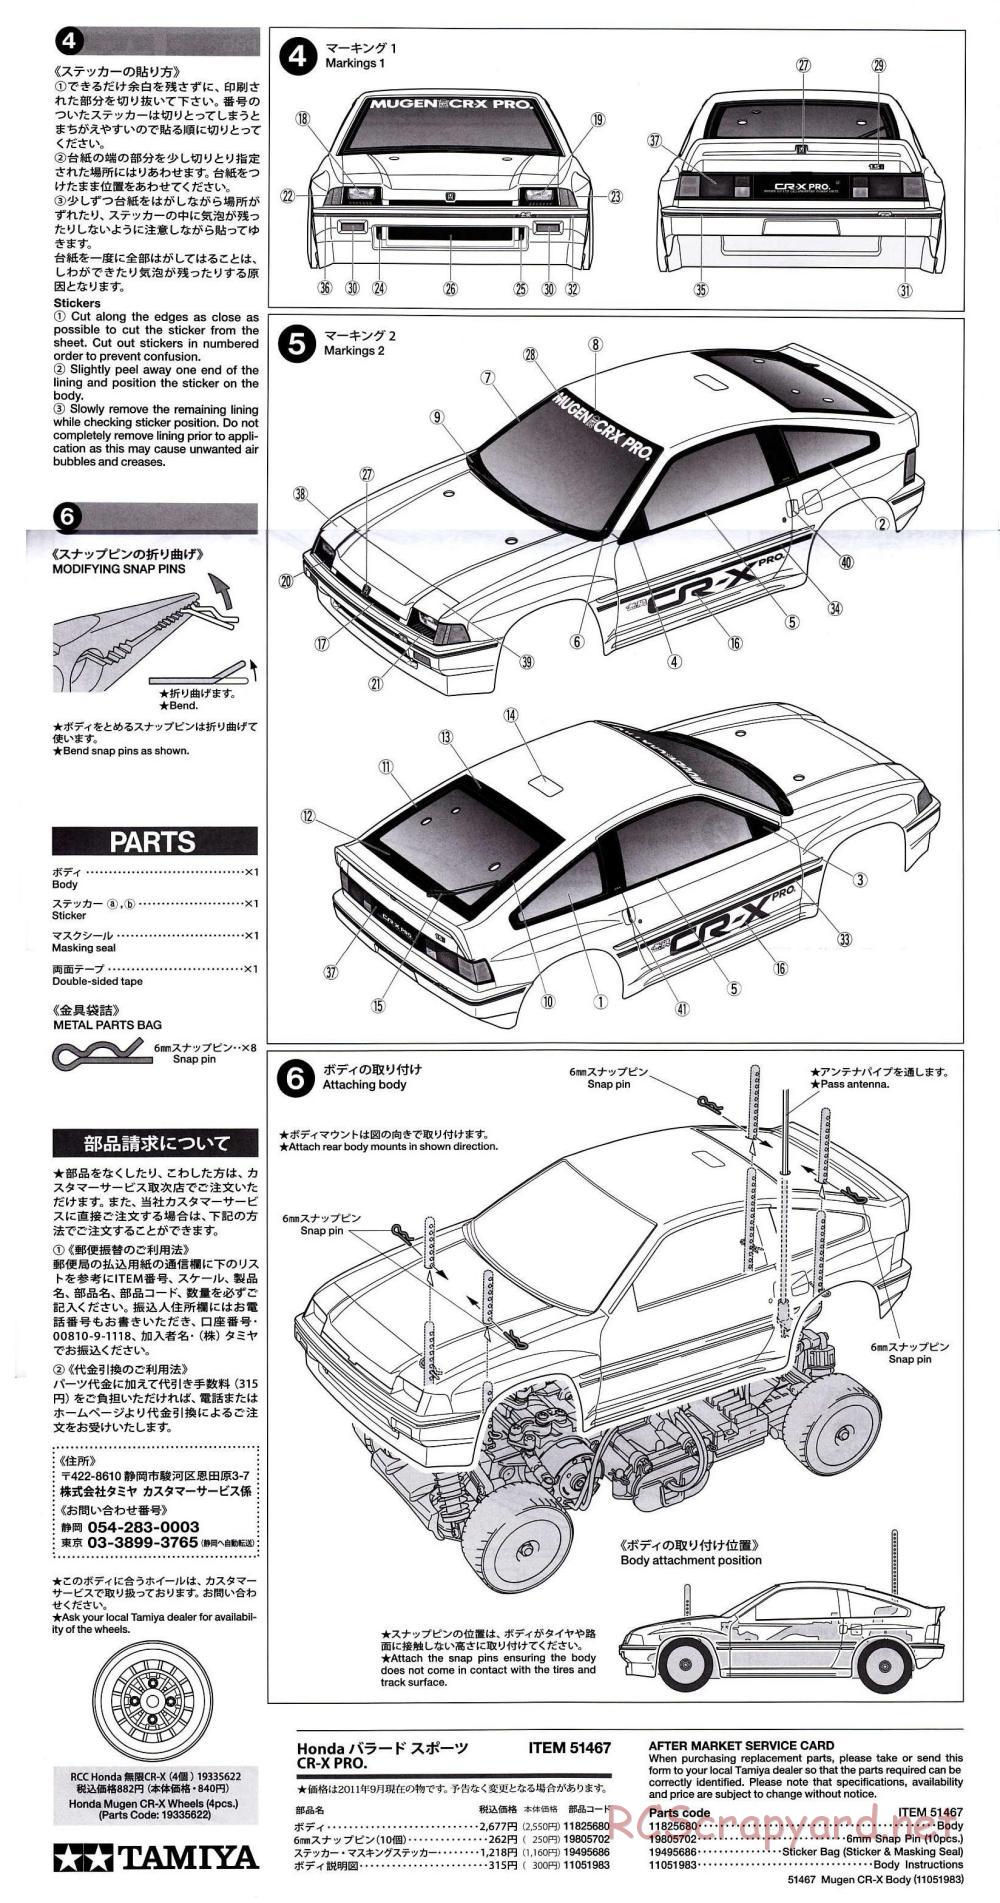 Tamiya - Honda Ballade Sports Mugen CR-X Pro - M-05 Chassis - Body Manual - Page 2